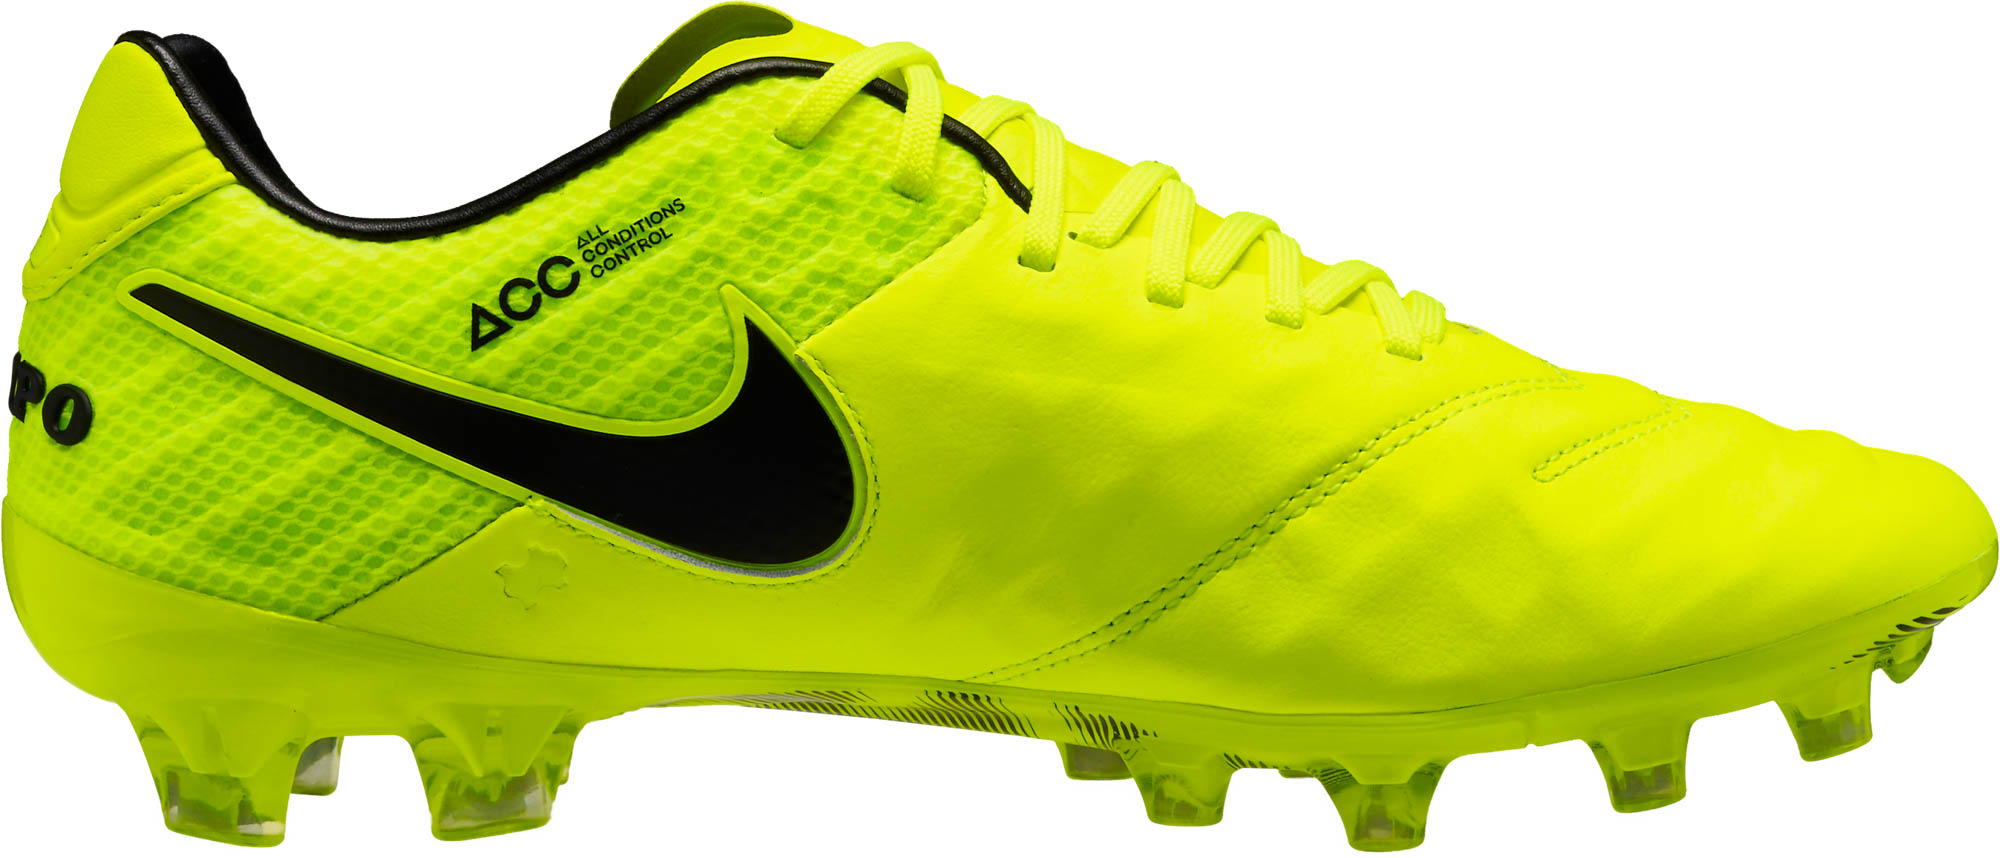 vermogen Bezit specificatie Nike Tiempo Legend VI FG - Tiempo Legend Soccer Cleats